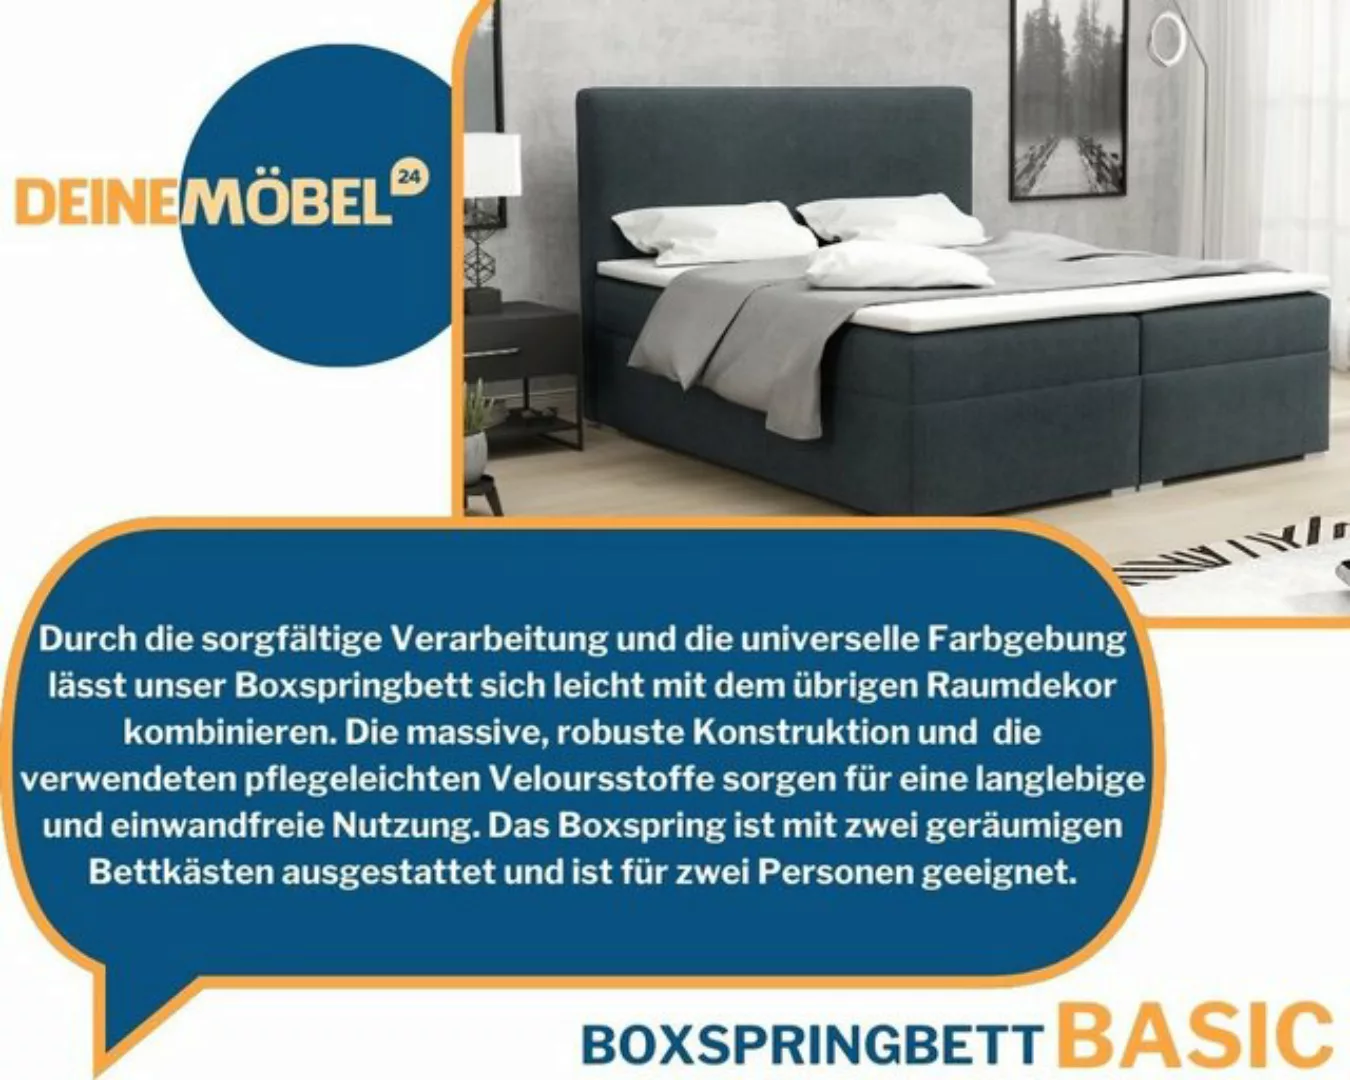 Deine Möbel 24 Boxspringbett Polsterbett Komplettbett Hotelbett BASIC (Eheb günstig online kaufen